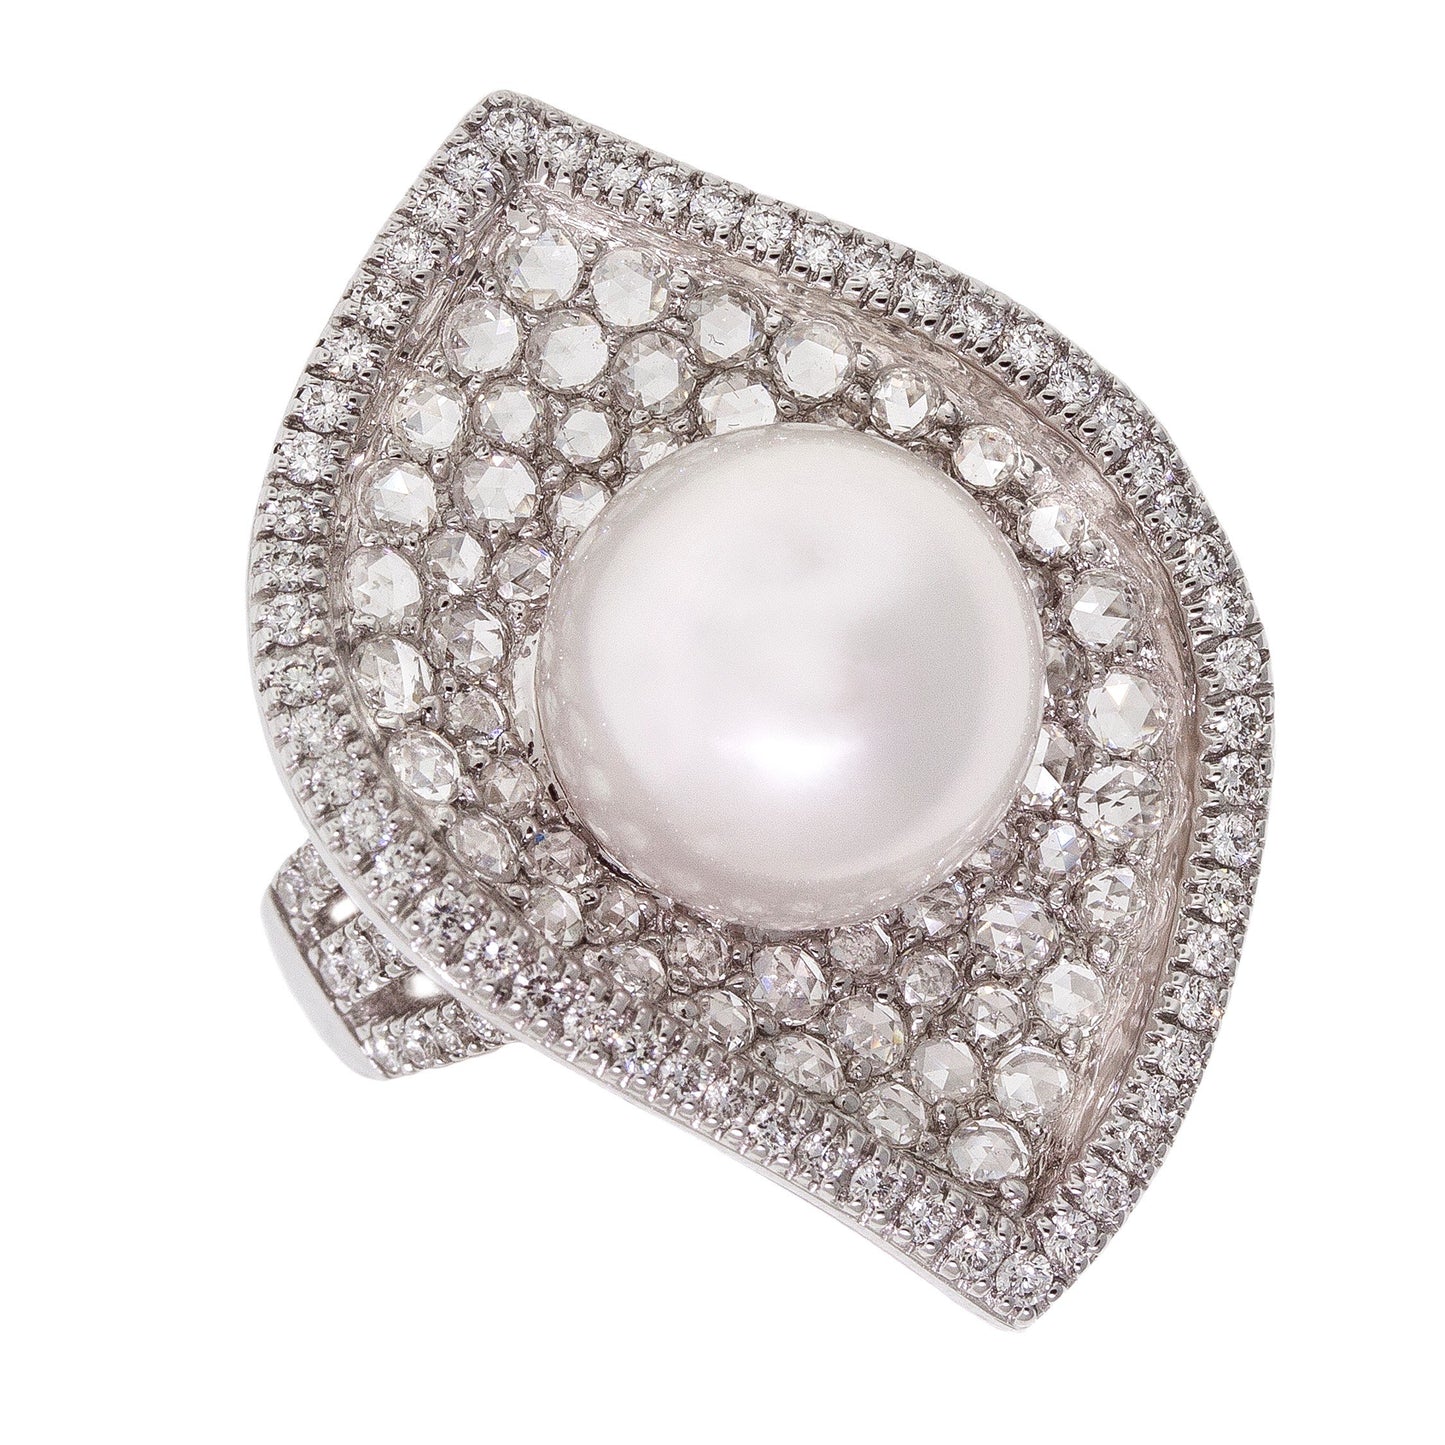   Pearl Ring 